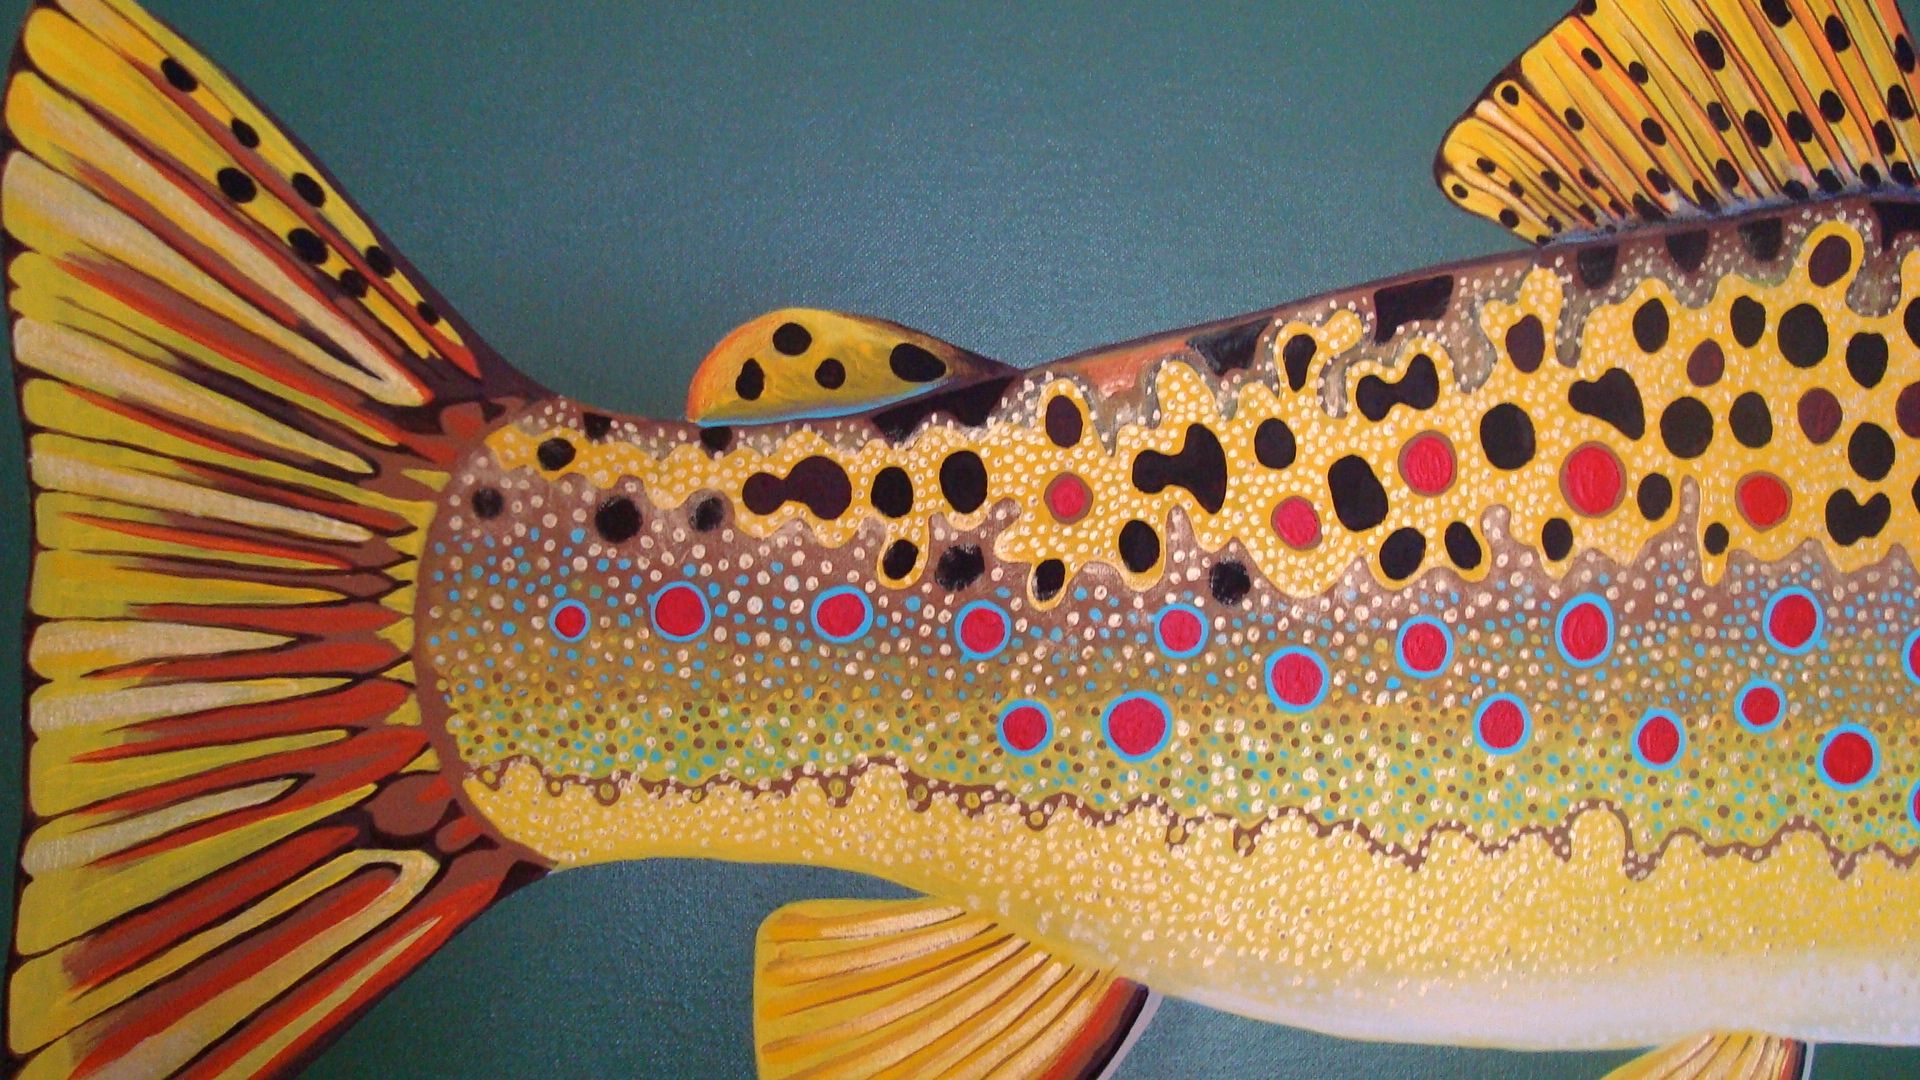 1920x1080 Rainbow Trout Wallpaper | Trout art, Rainbow trout picture, Fish quilt